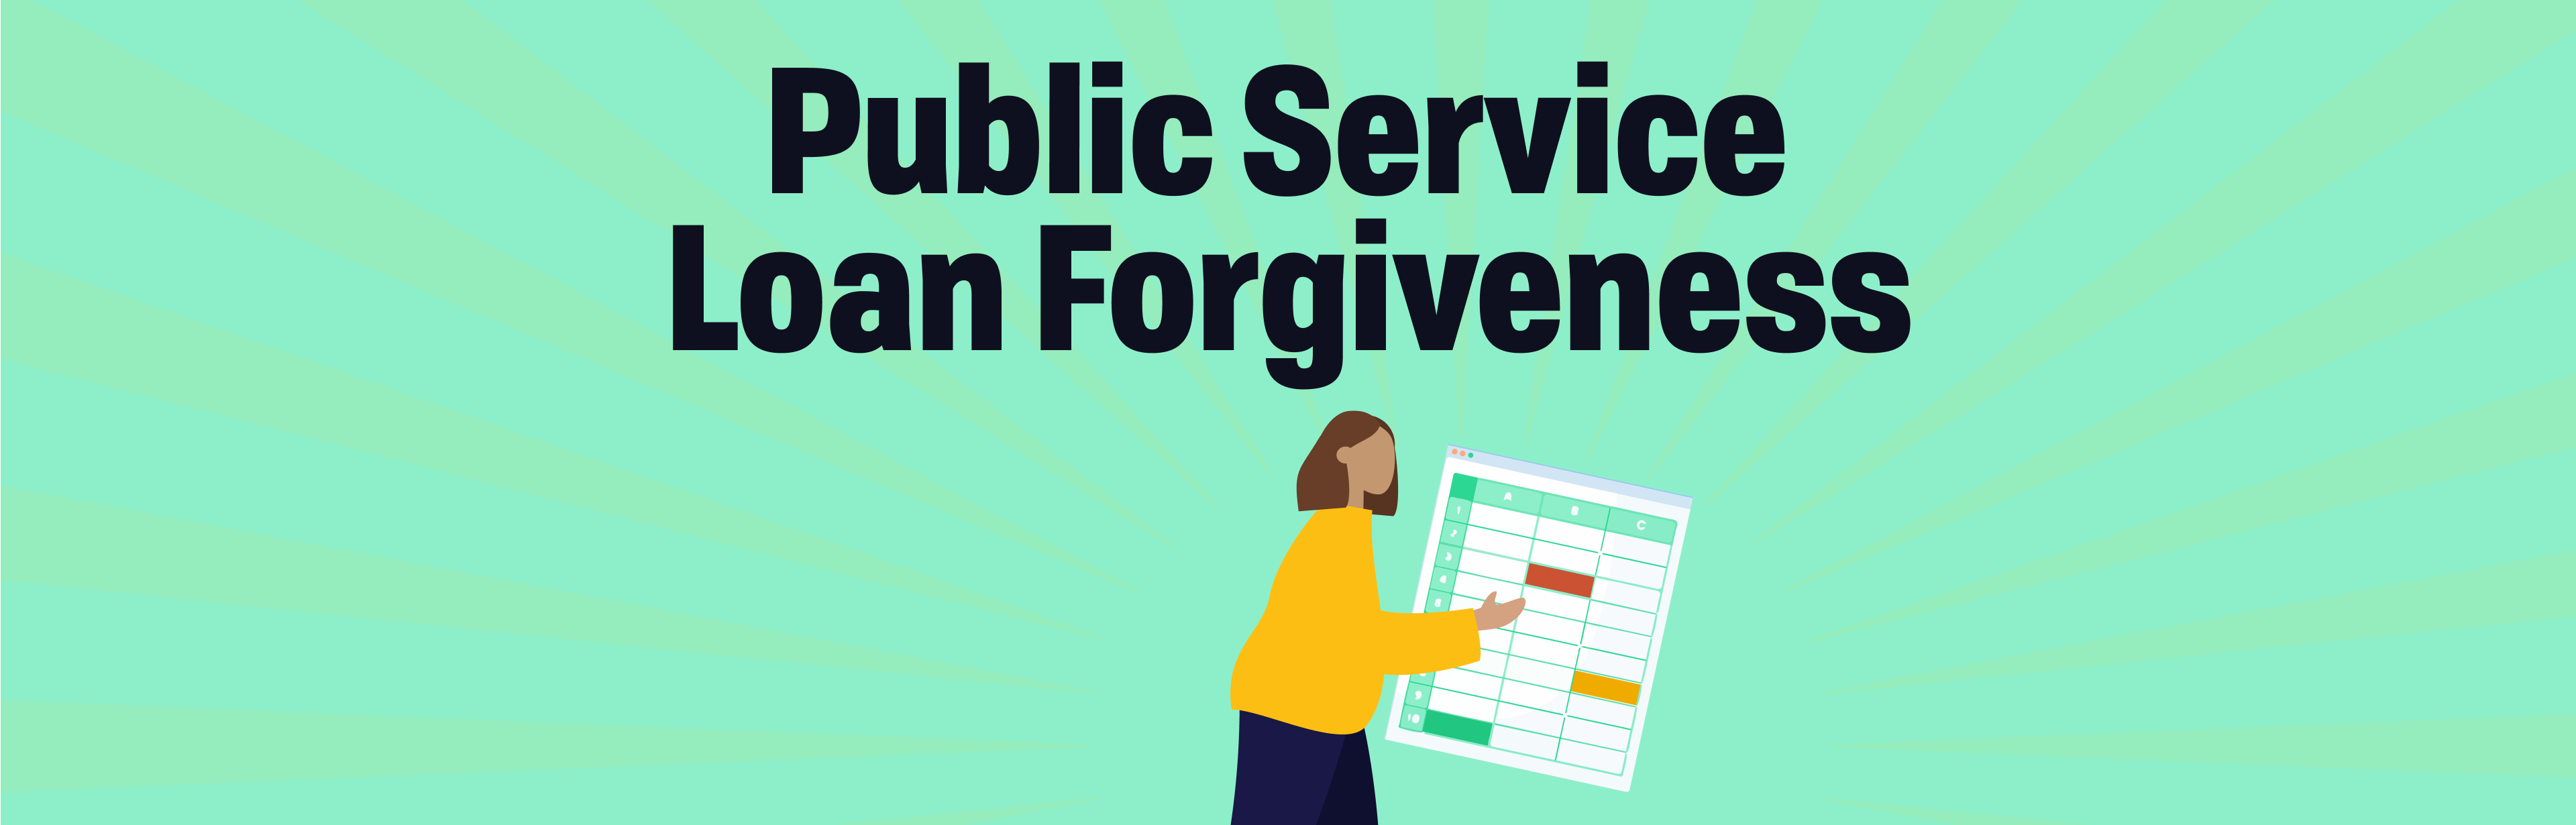 Episode 21: Public Service Loan Forgiveness Matter of Life and Debt